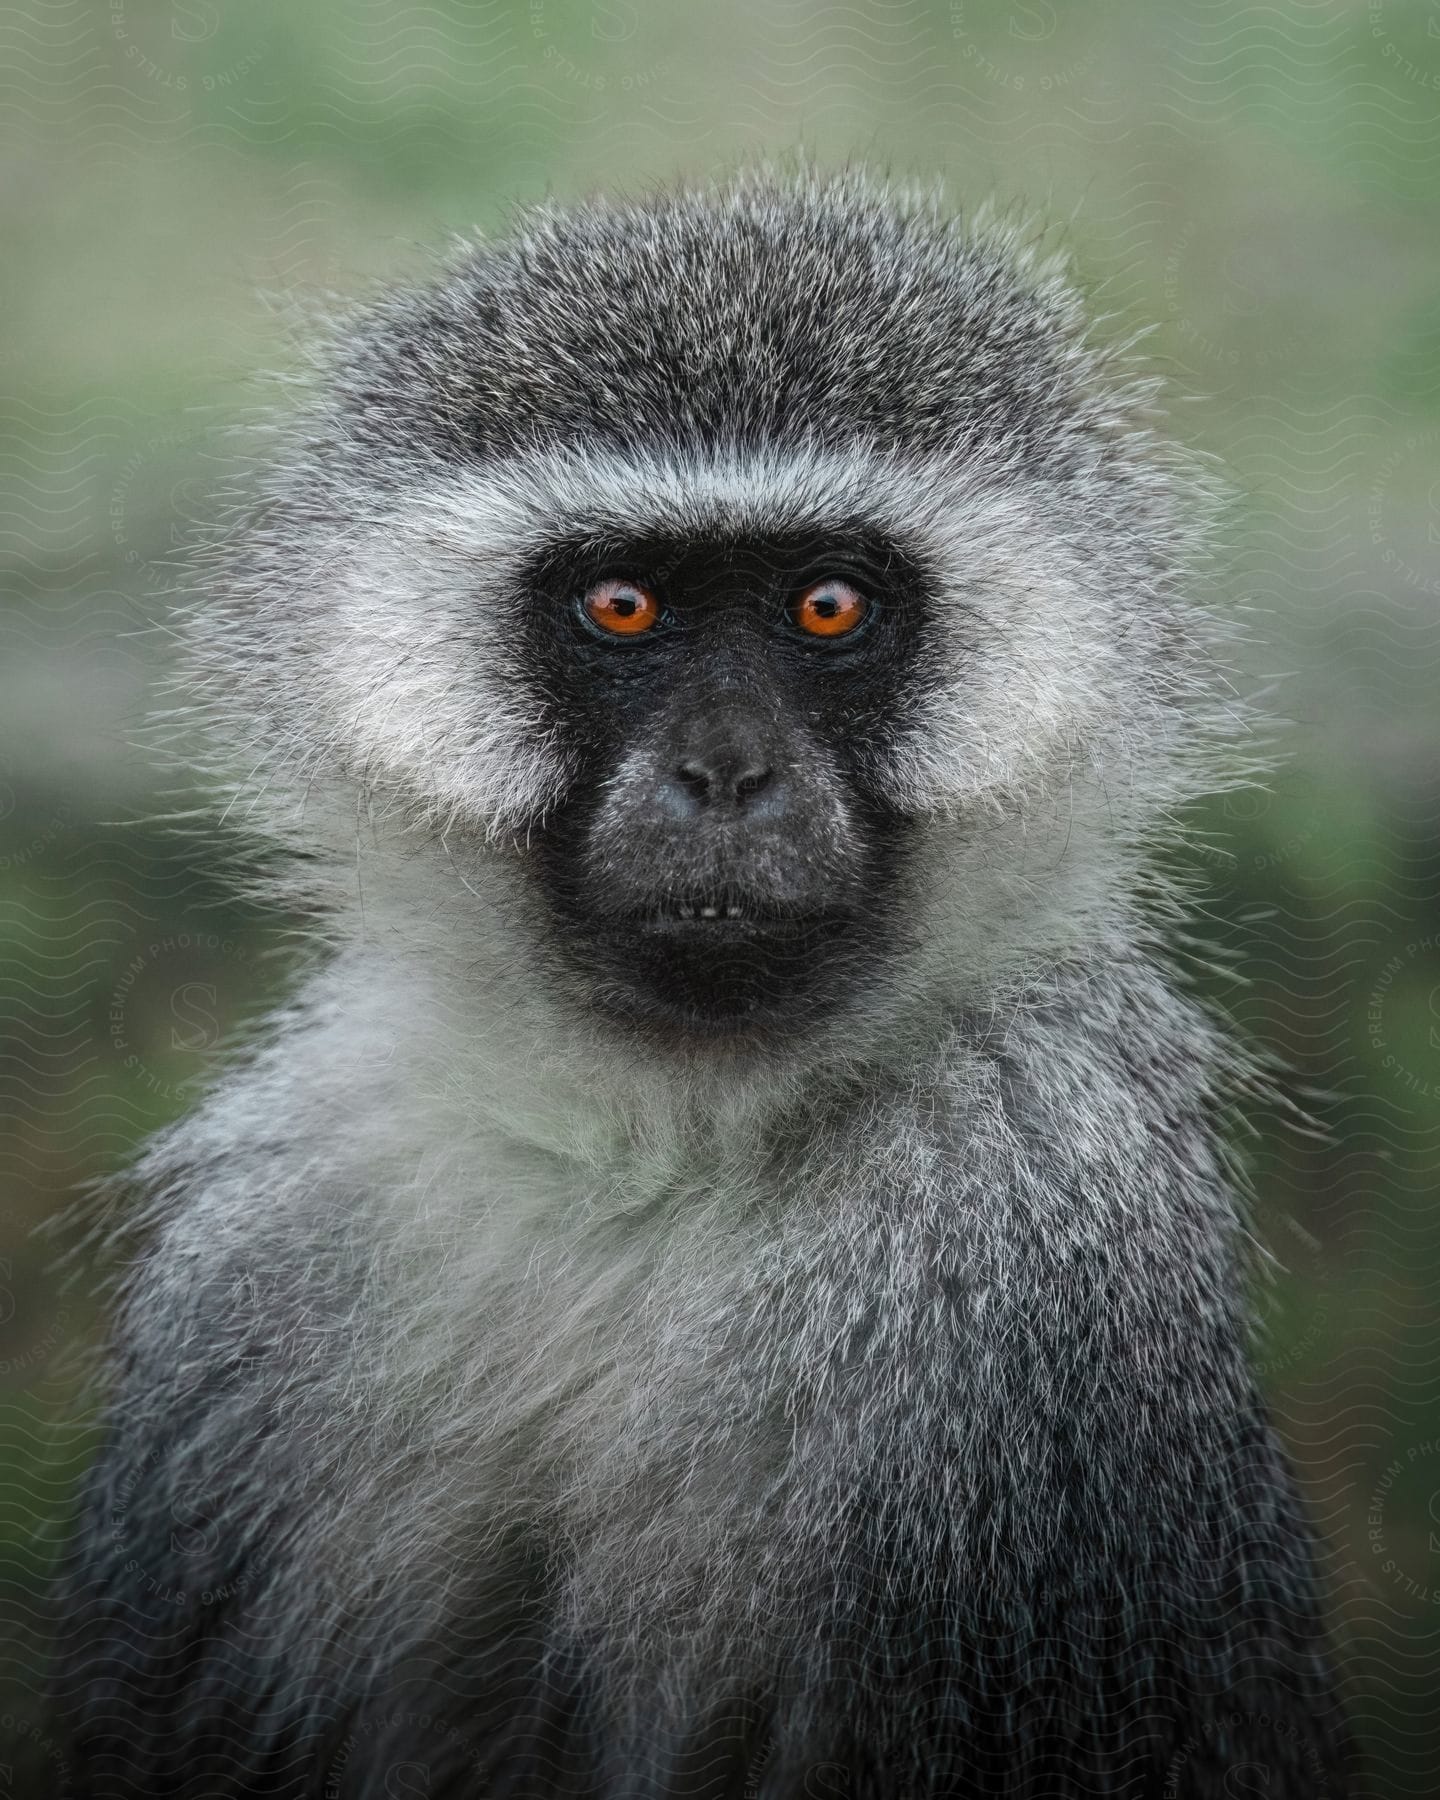 A Vervet monkey is looking straight forward.